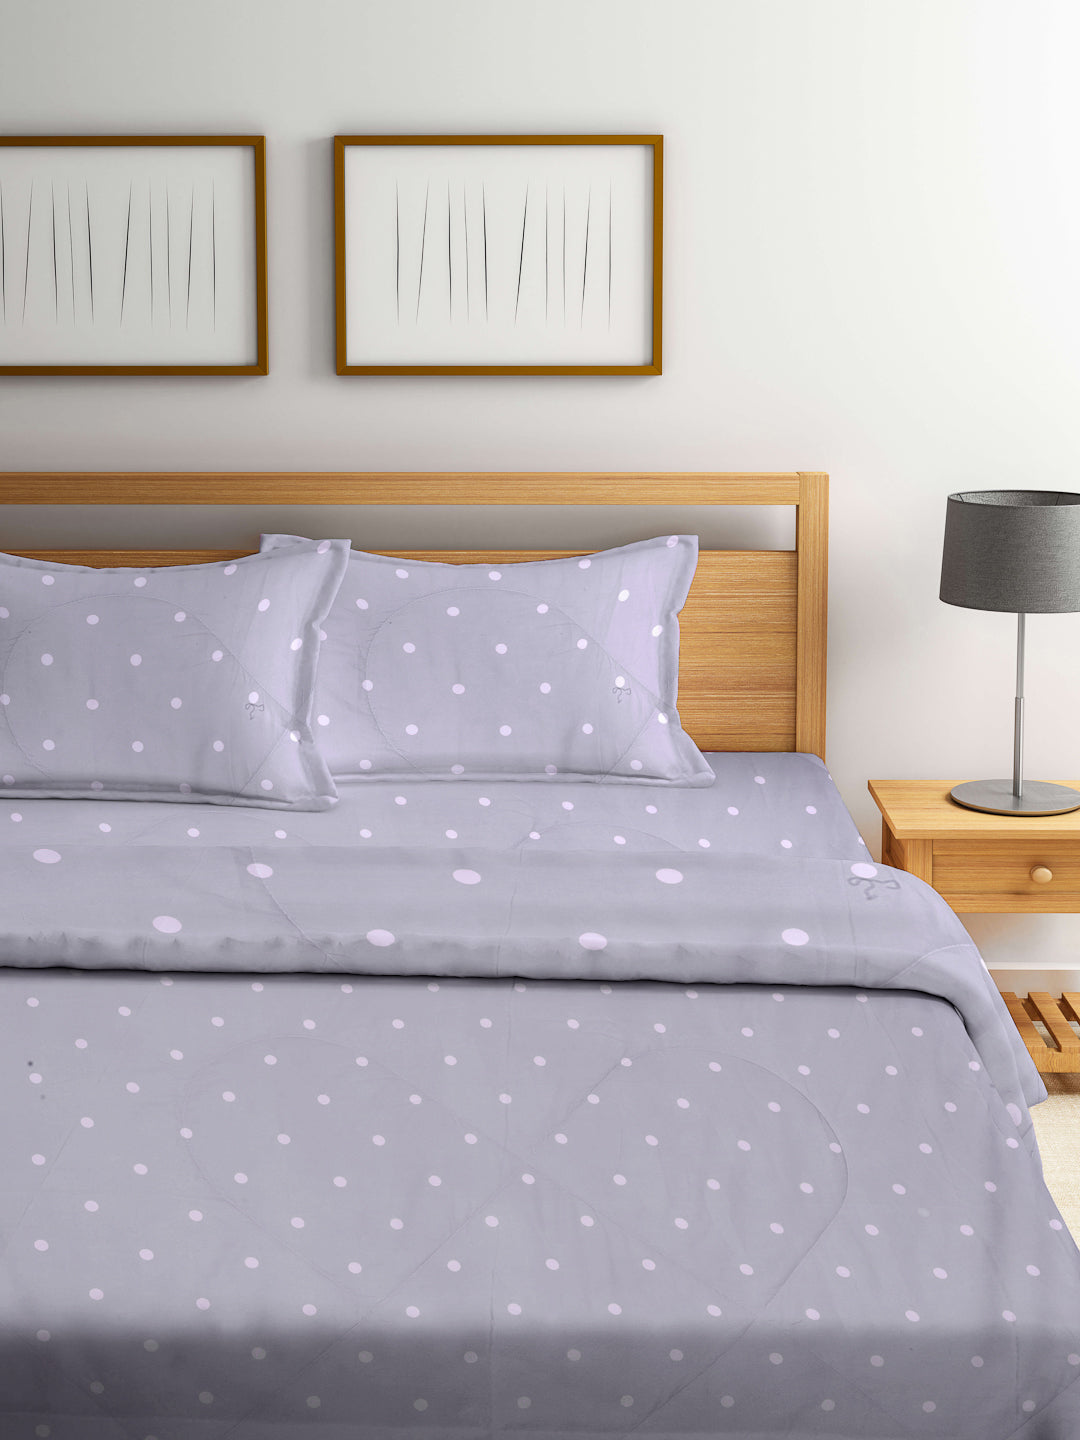 Arrabi Grey Polka dot TC Cotton Blend Double Size Comforter Bedding Set with 2 Pillow Cover